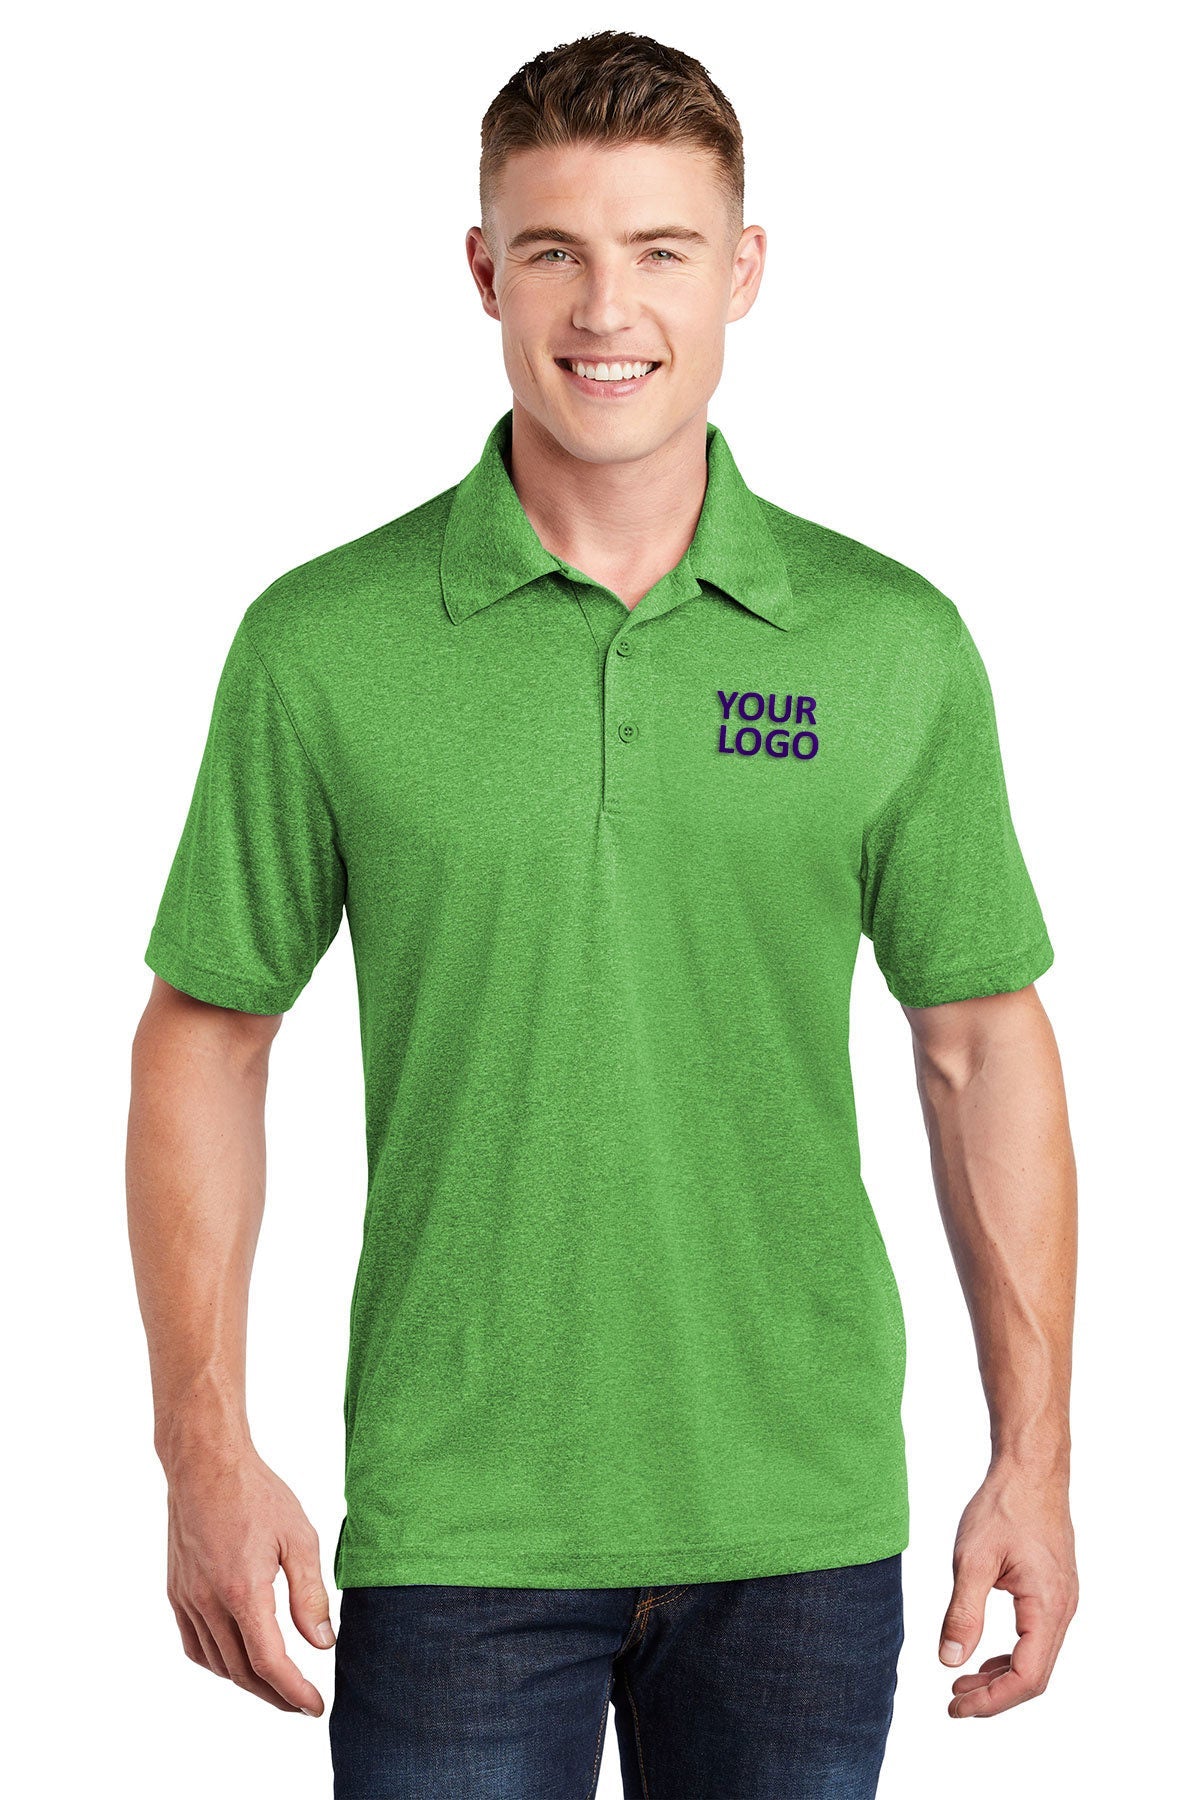 Sport-Tek Turf Green Heather ST660 polo shirts company logos